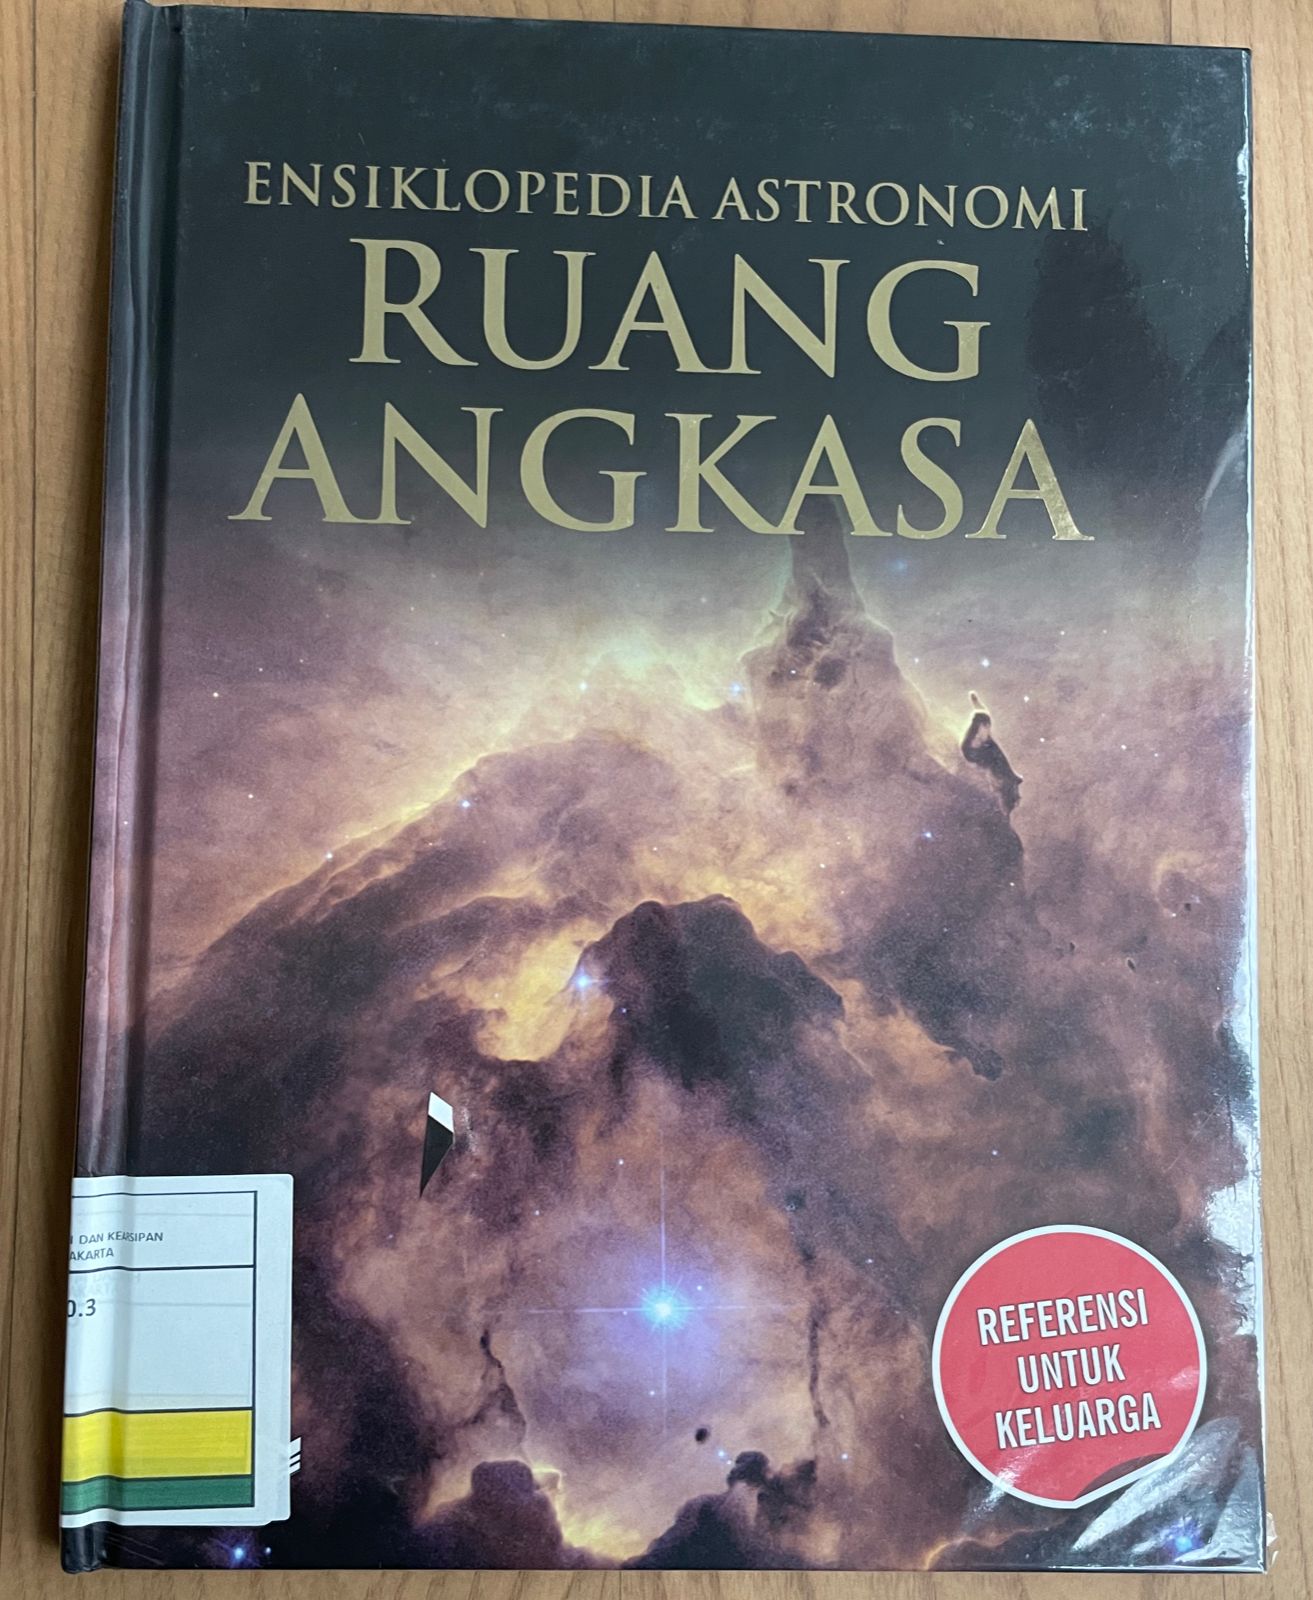 Ensiklopedia Astronomi Jilid 6 :  Ruang Angkasa